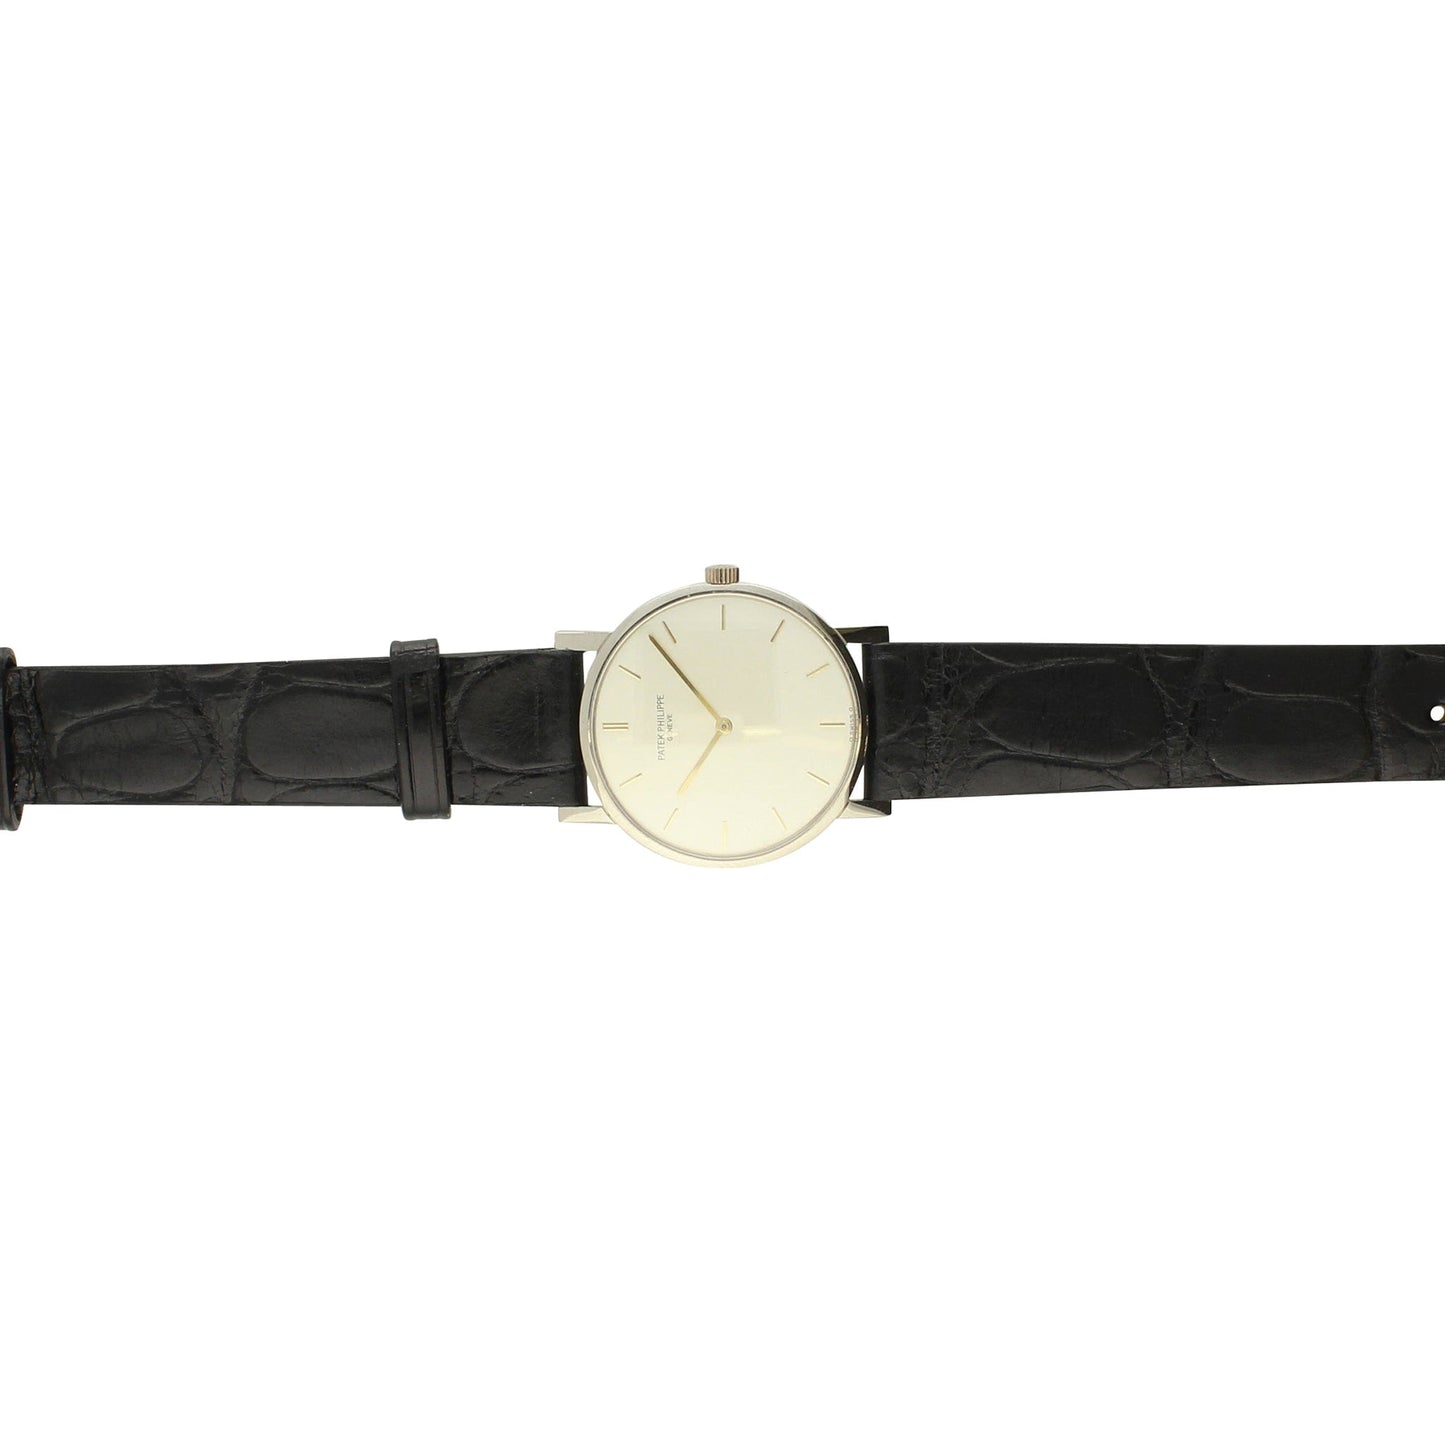 18ct white gold, reference 3470 'ultra thin' Calatrava wristwatch. Made 1964.